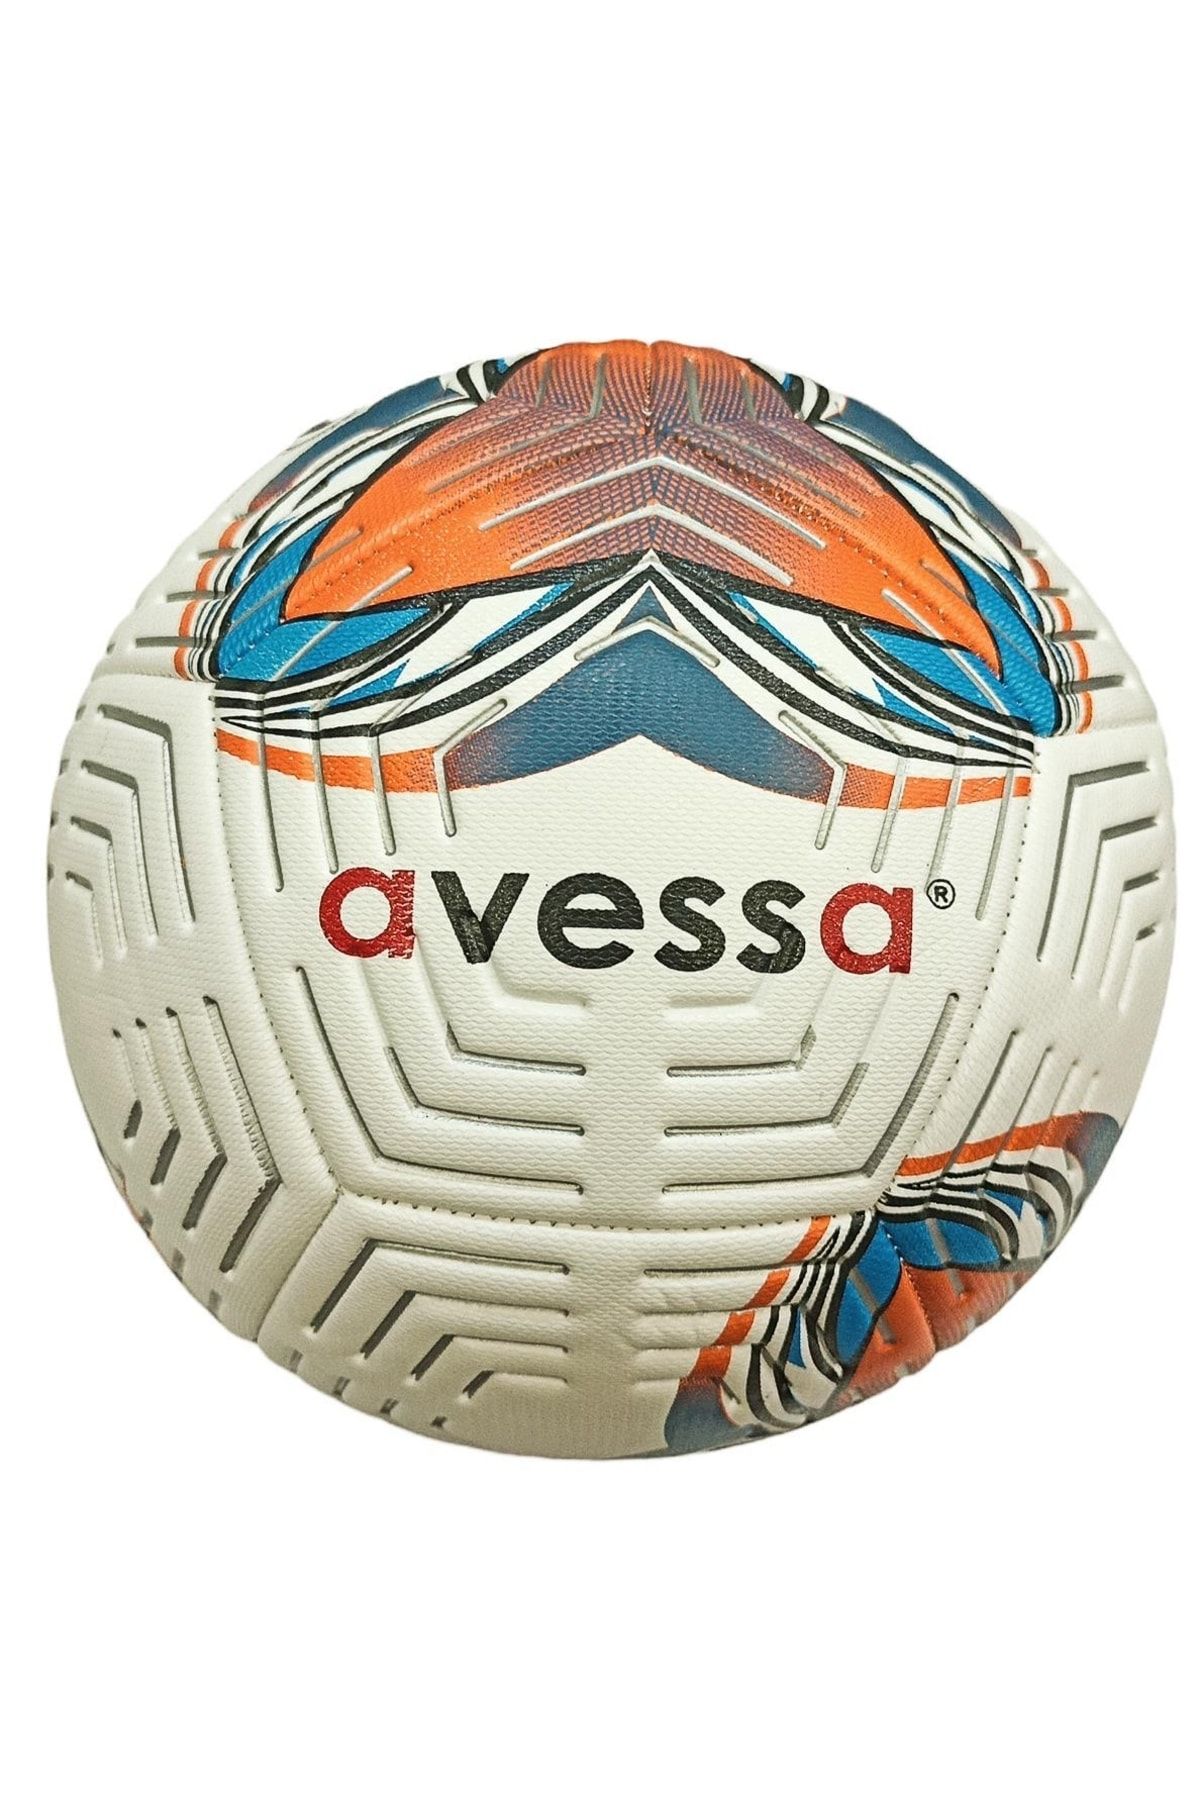 Avessa Ft-300 Futbol Topu No.5 Turuncu Mavi Desenli 425 Gr